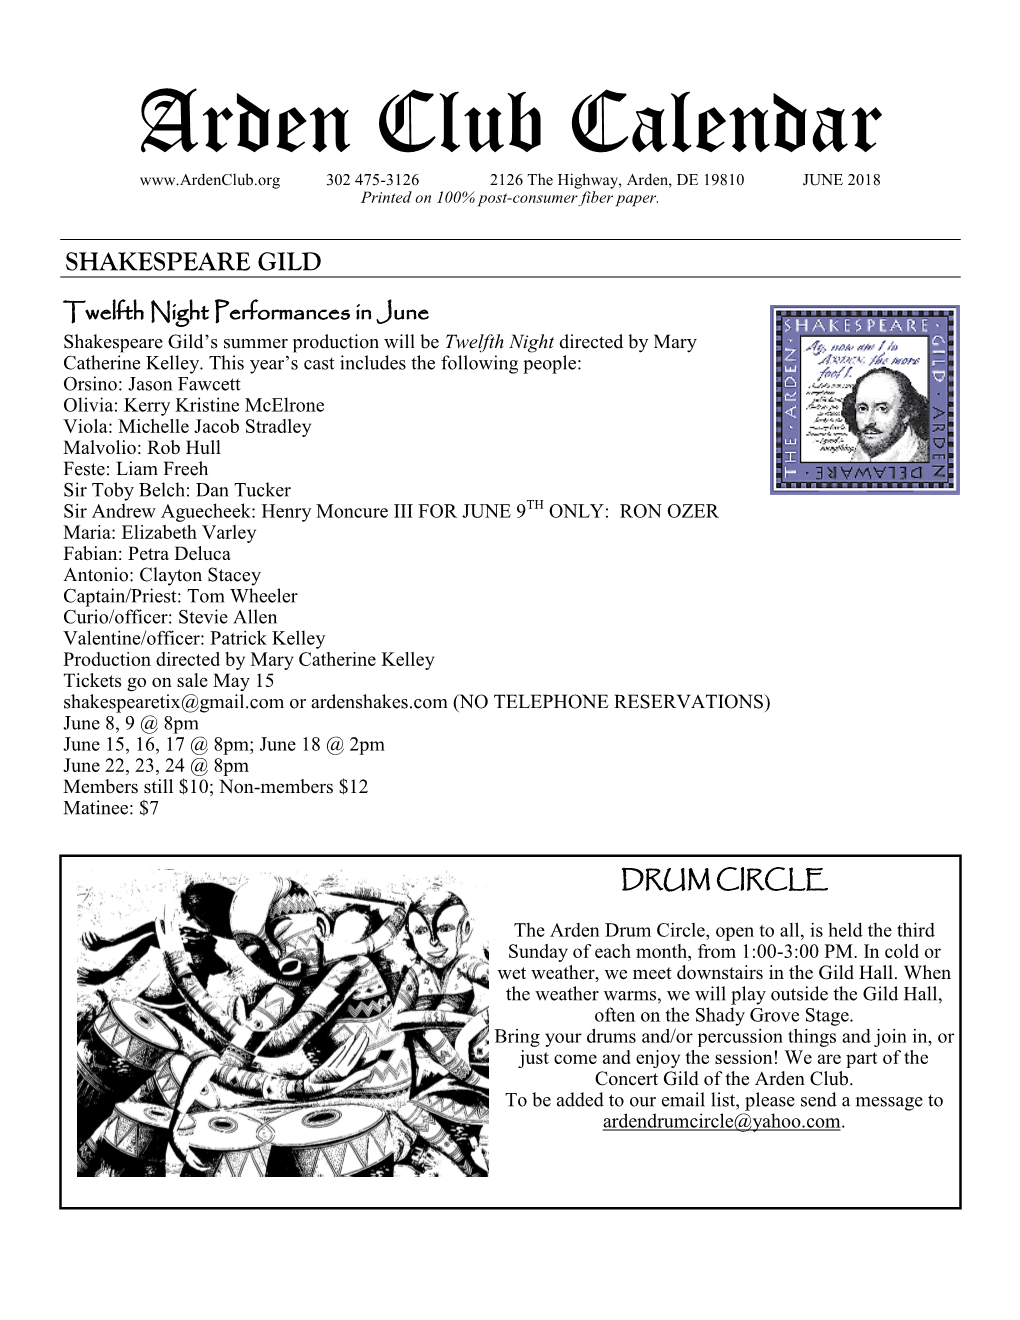 Arden Club Calendar 302 475-3126 2126 the Highway, Arden, DE 19810 JUNE 2018 Printed on 100% Post-Consumer Fiber Paper